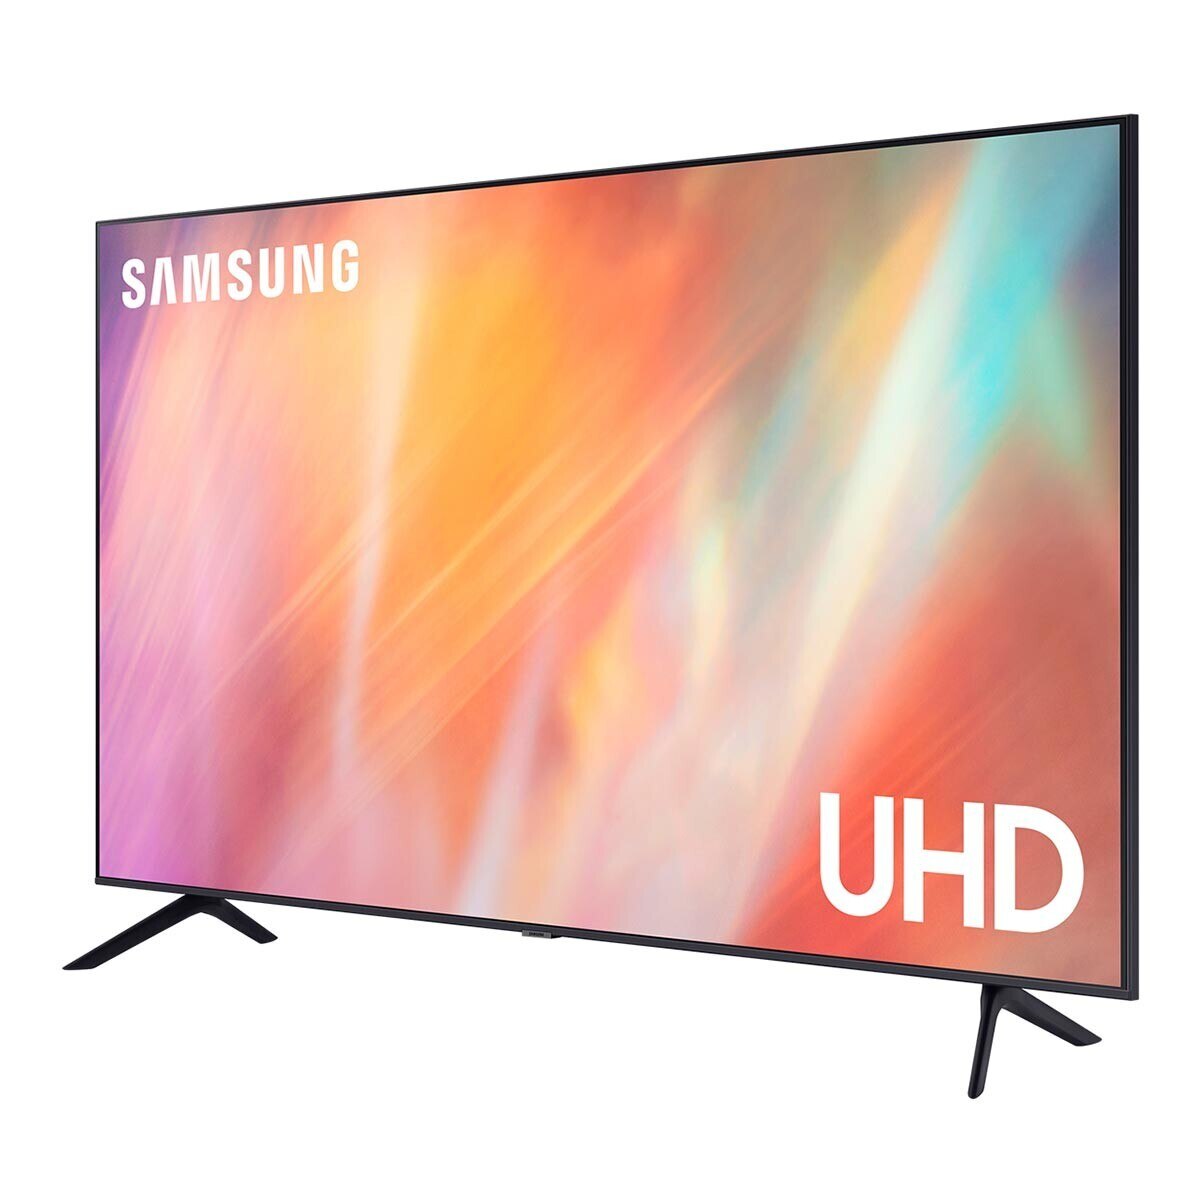 Samsung 75吋 UHD 4K 電視 UA75AU7700WXZW